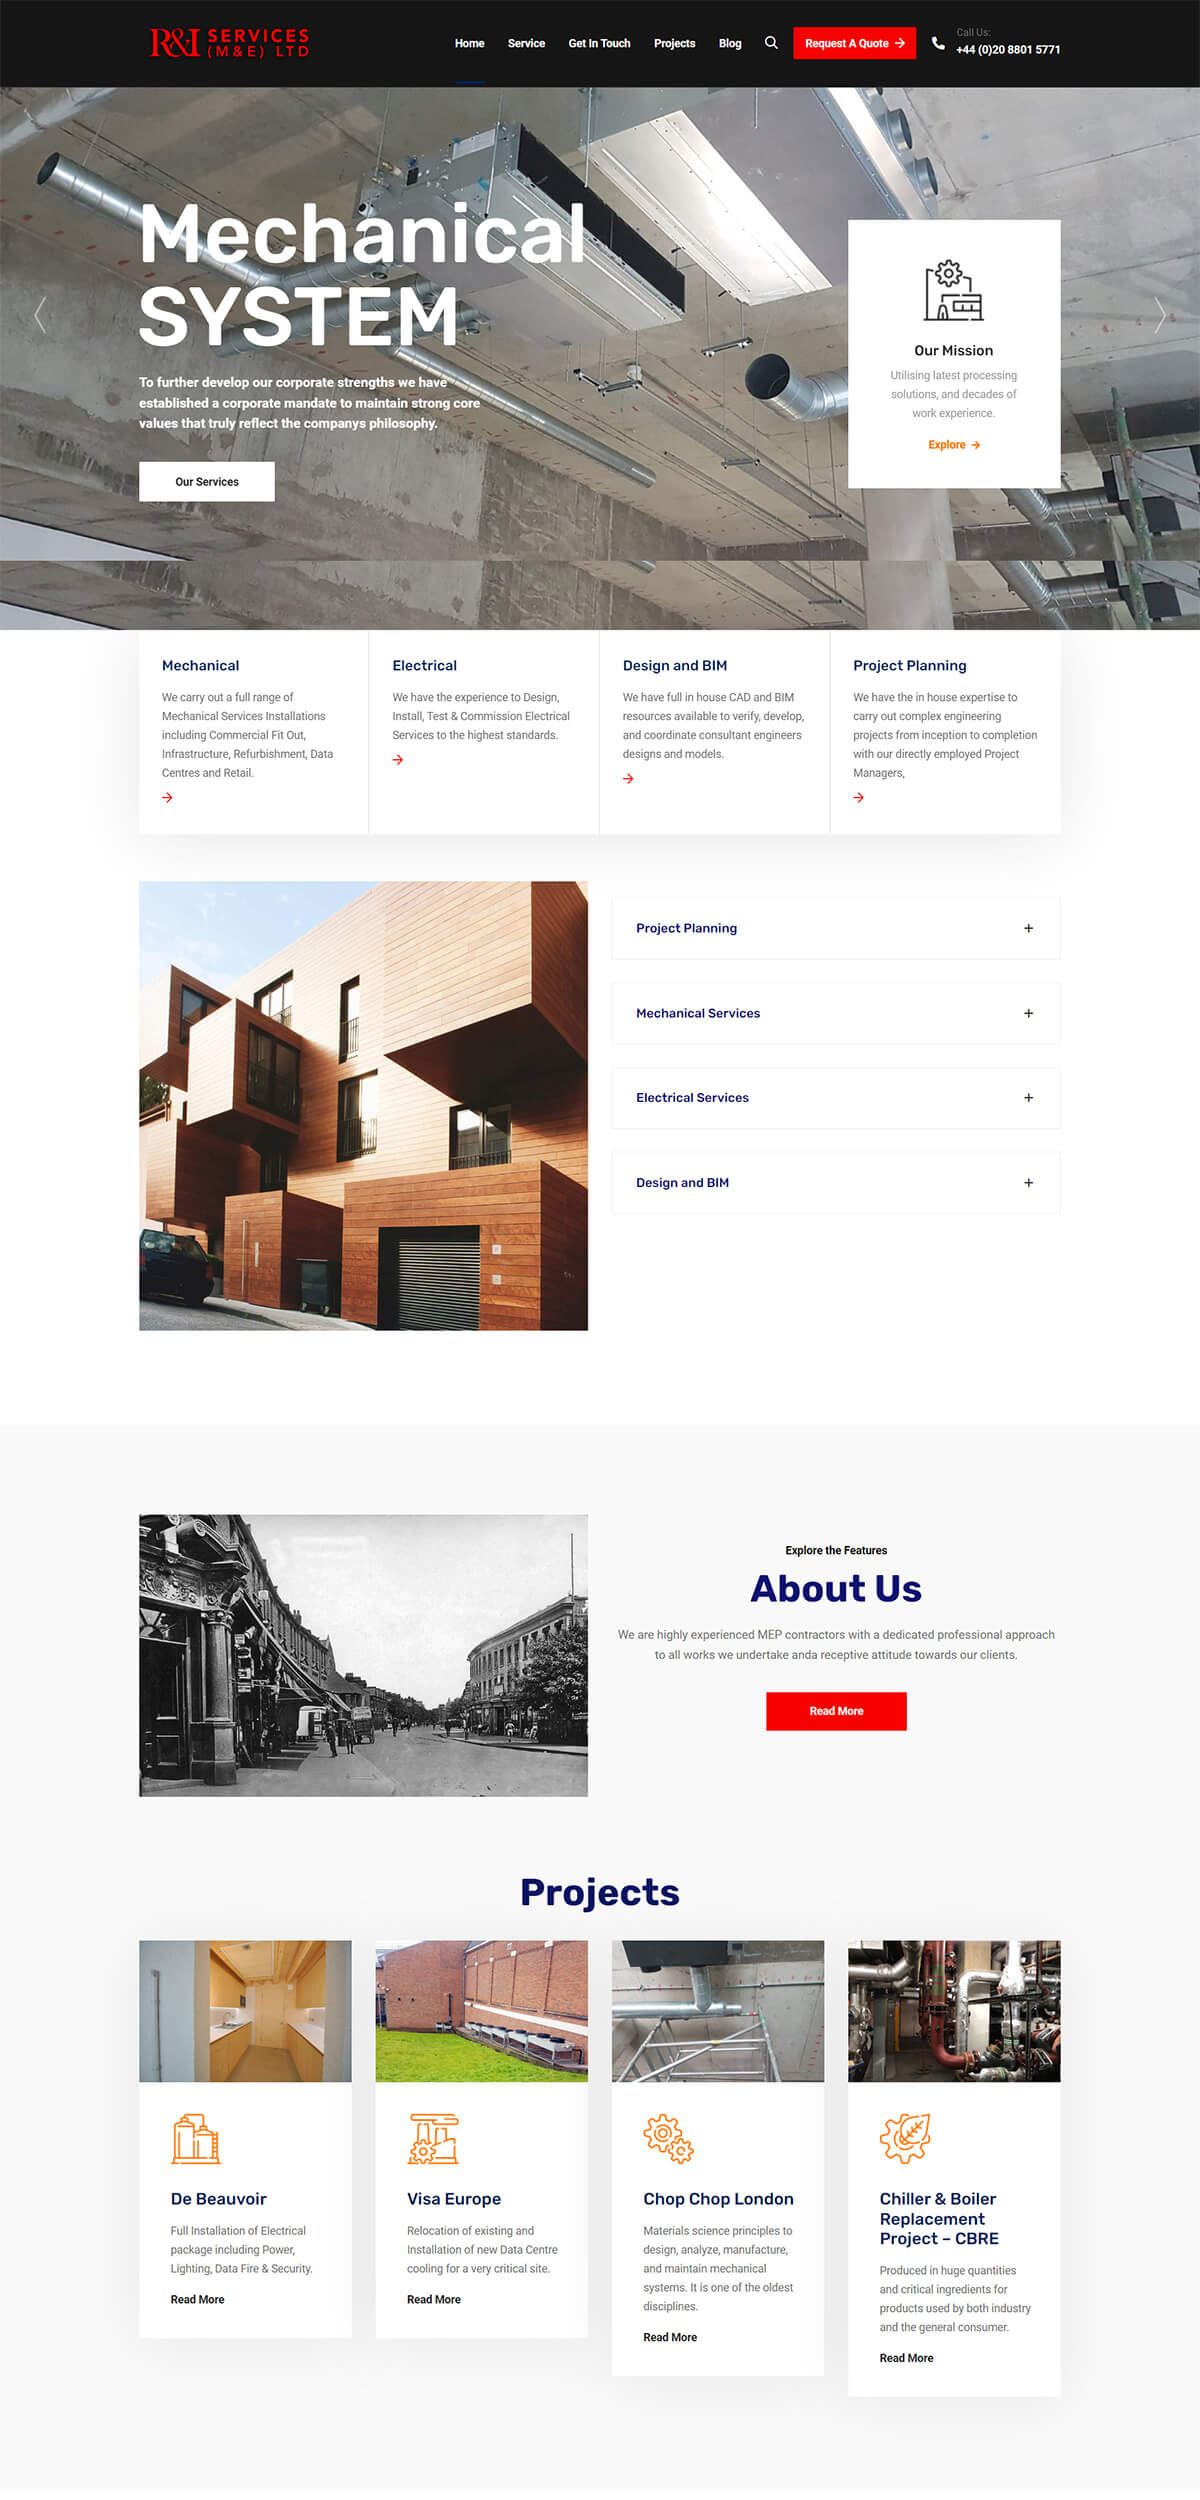 Construction services website designed by Digital DL Marketing